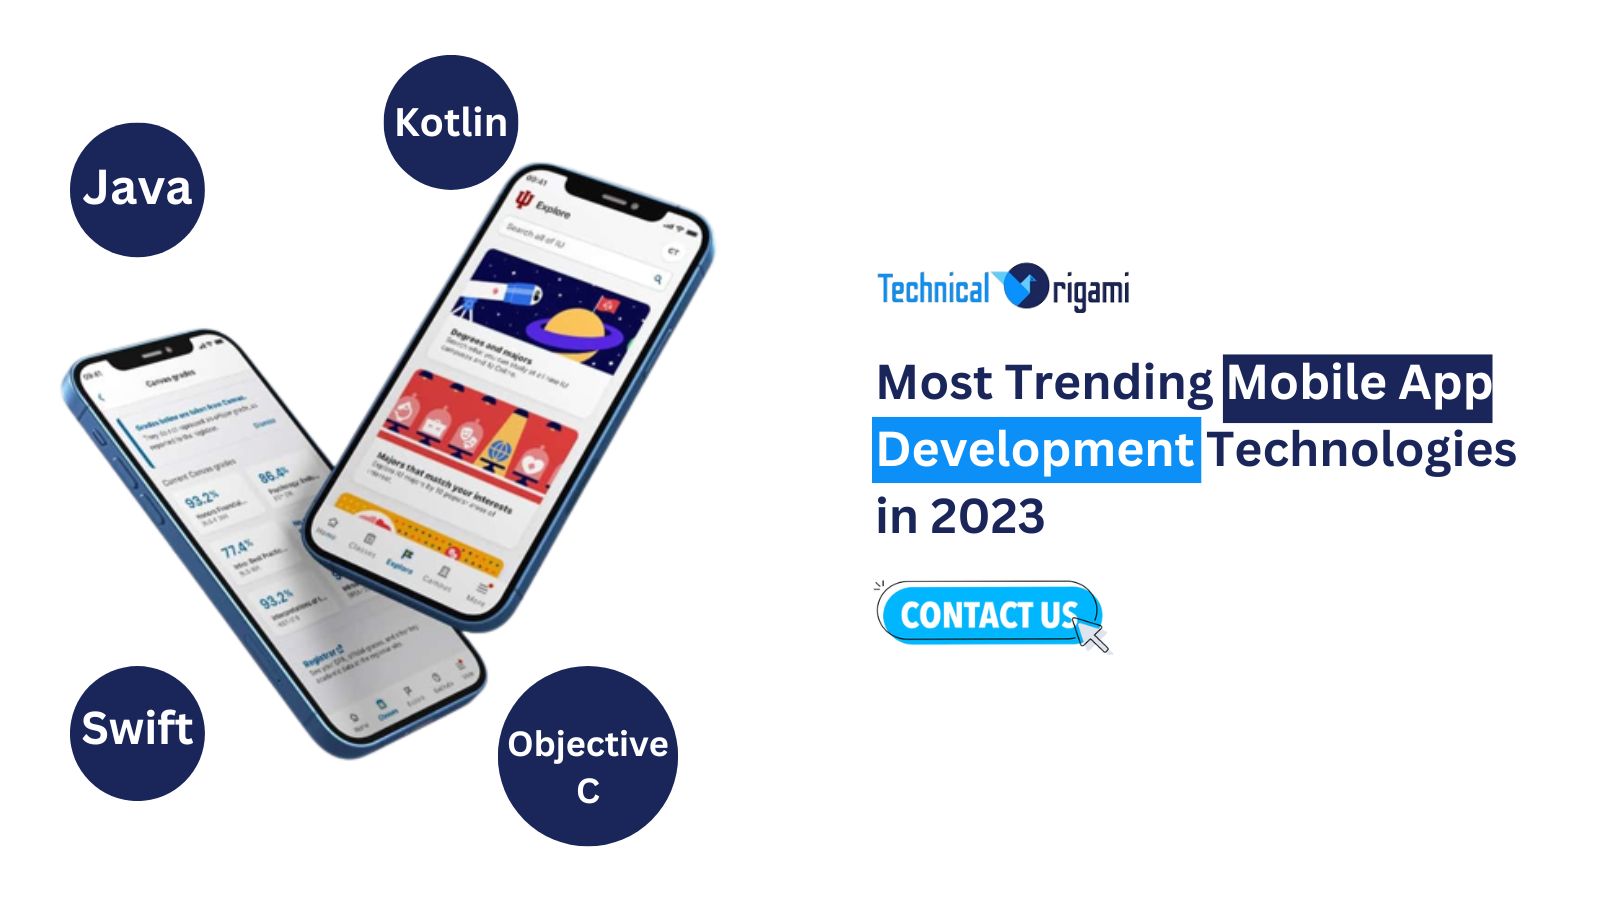 Most Trending Mobile App Development Technologies in 2023